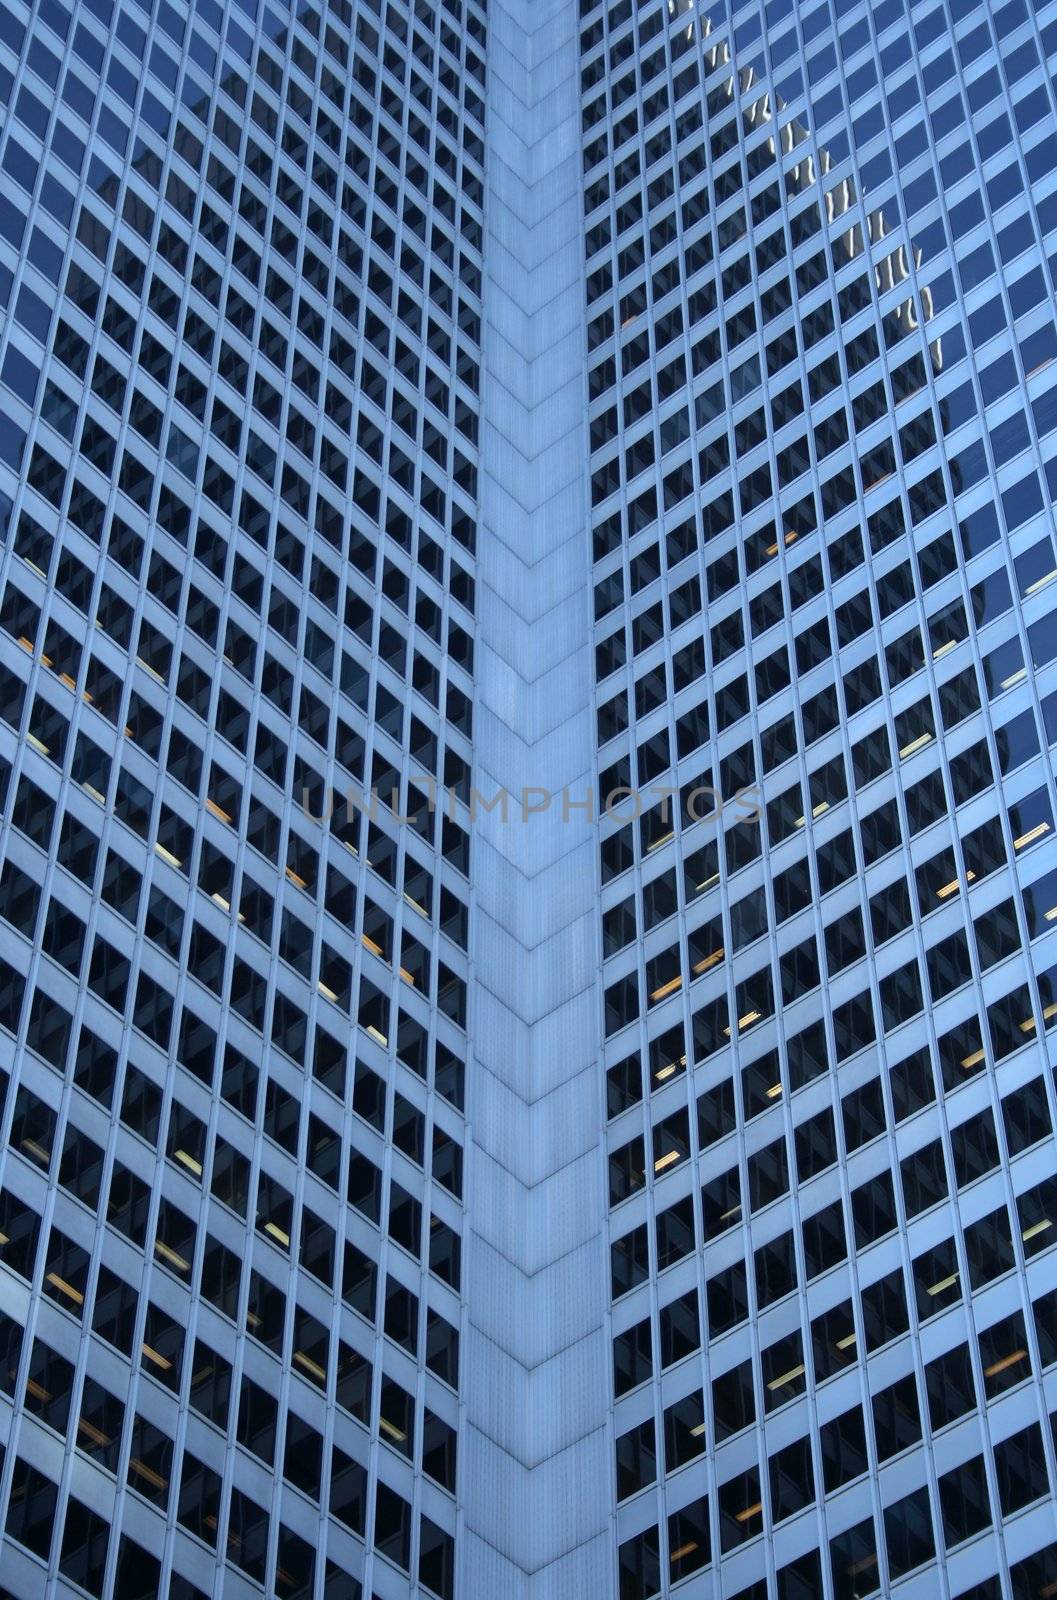 Inside corner of a glass-windowed office tower by anikasalsera